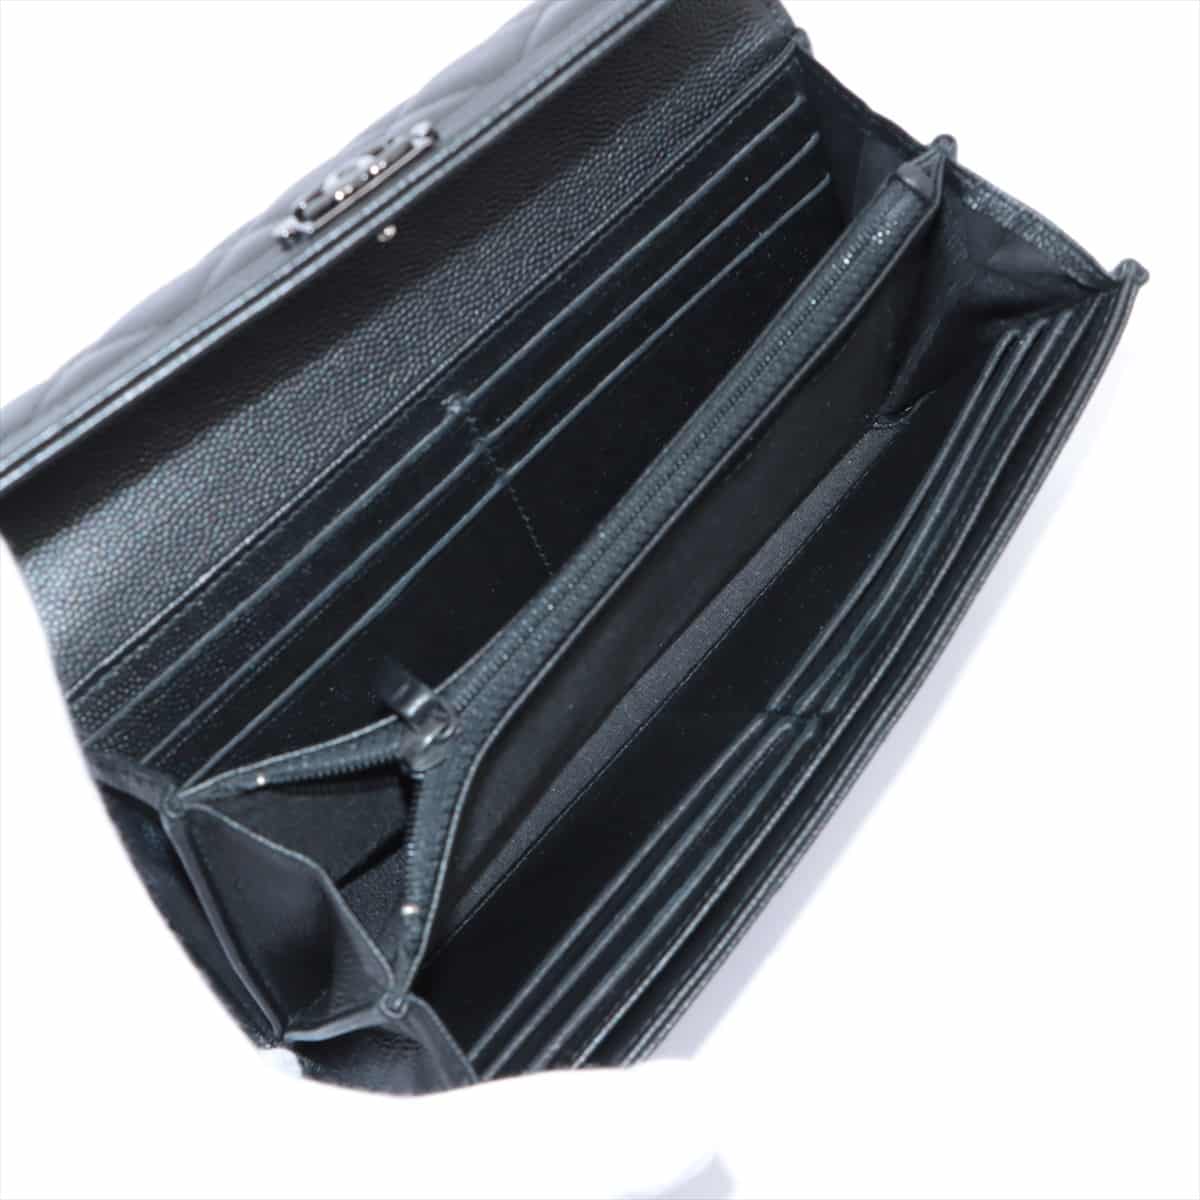 Chanel Boy Chanel Caviarskin Wallet flaps Black Silver Metal fittings 24XXXXXX